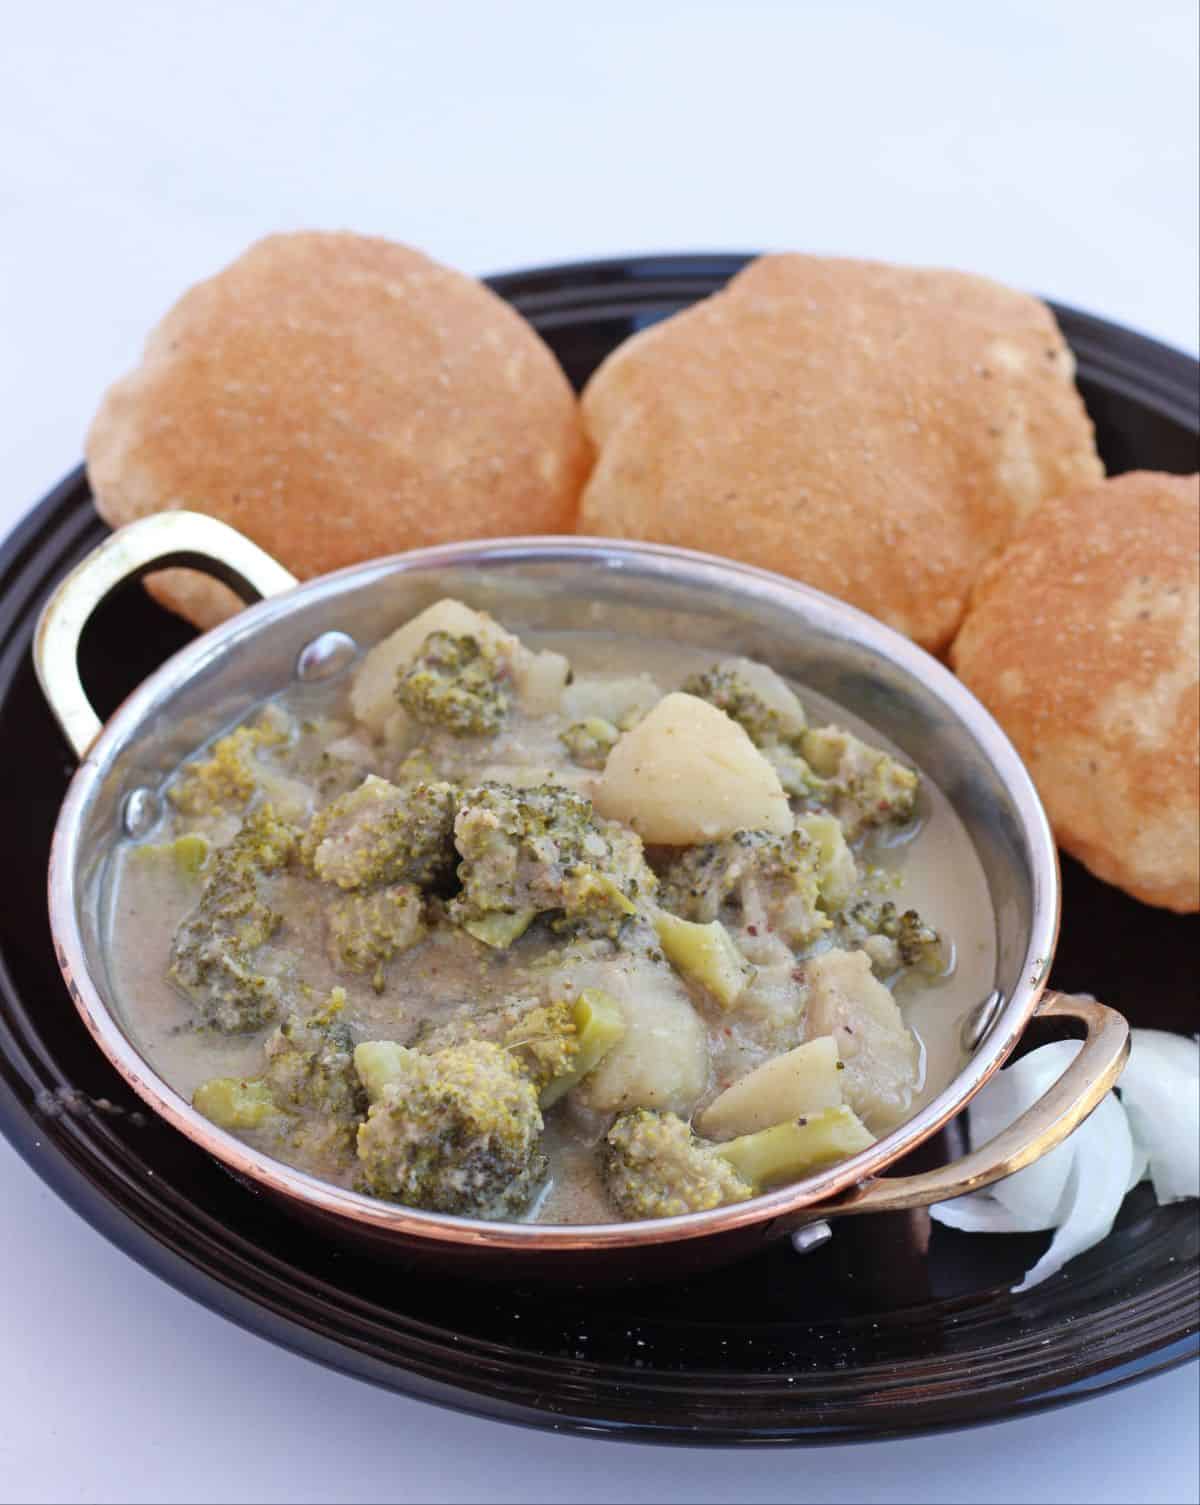 Broccoli and potato kurma in a bowl